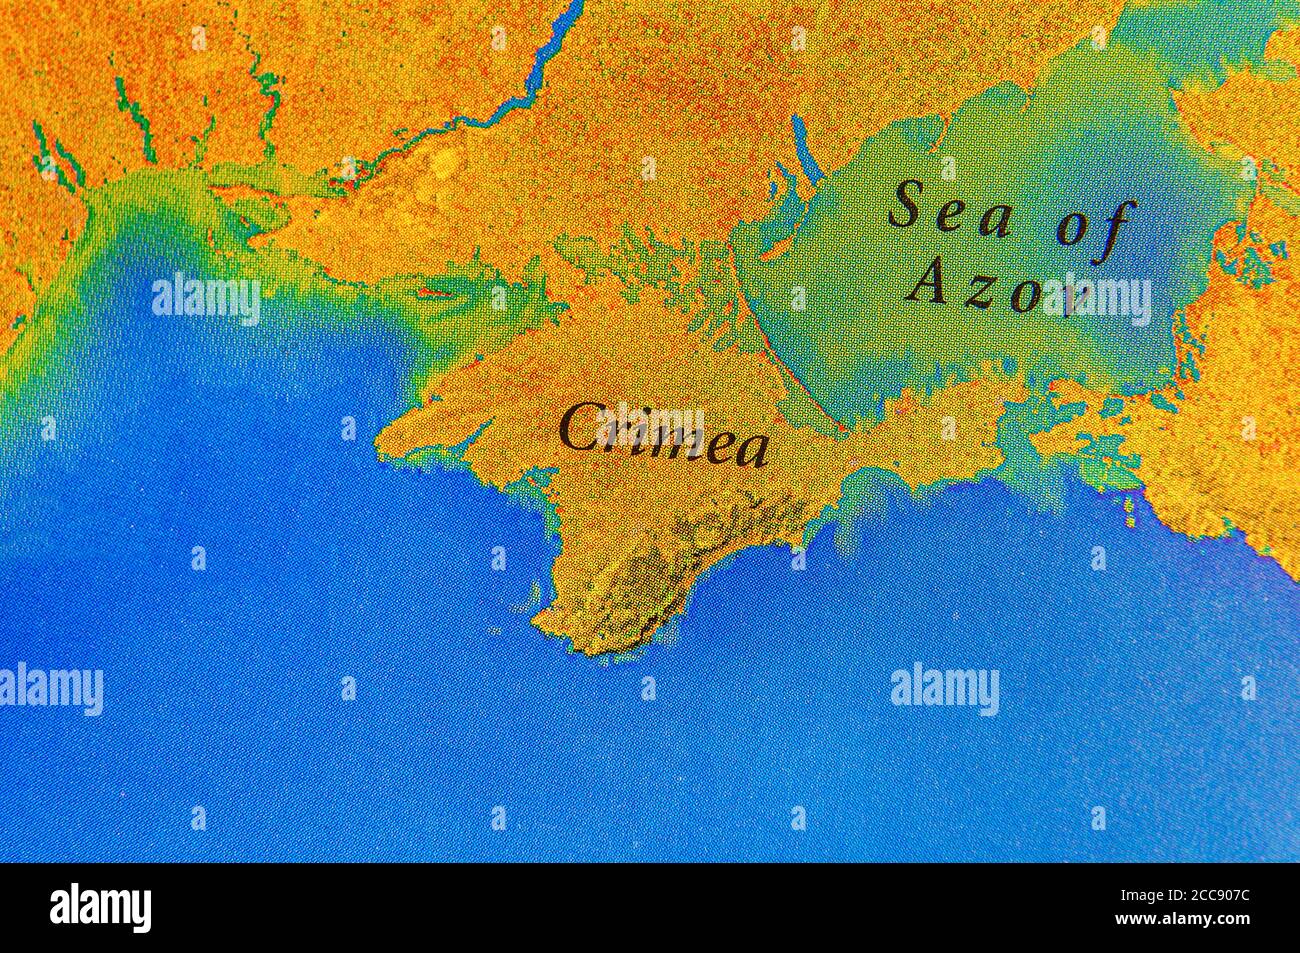 Geographic map of European Crimea and Sea of Azov Stock Photo